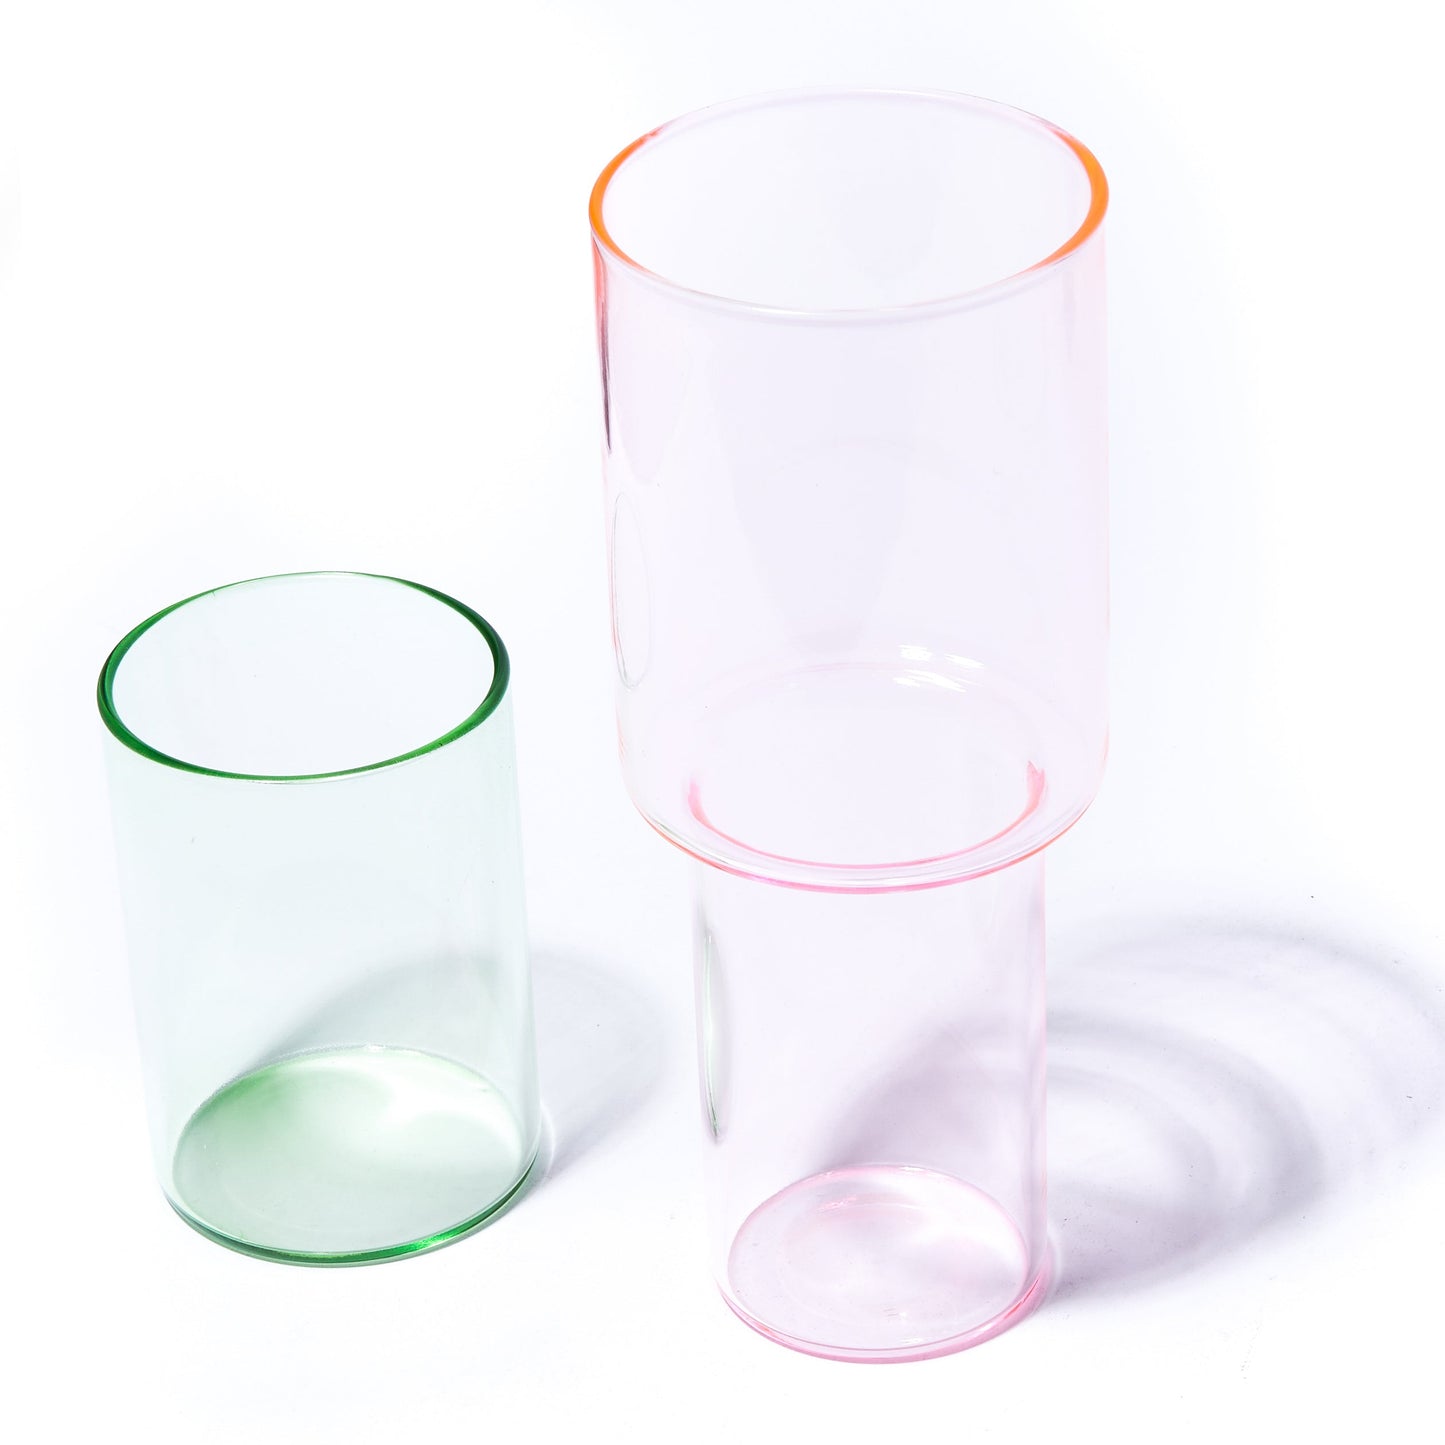 STACKING GLASS VASE | PINK & GREEN